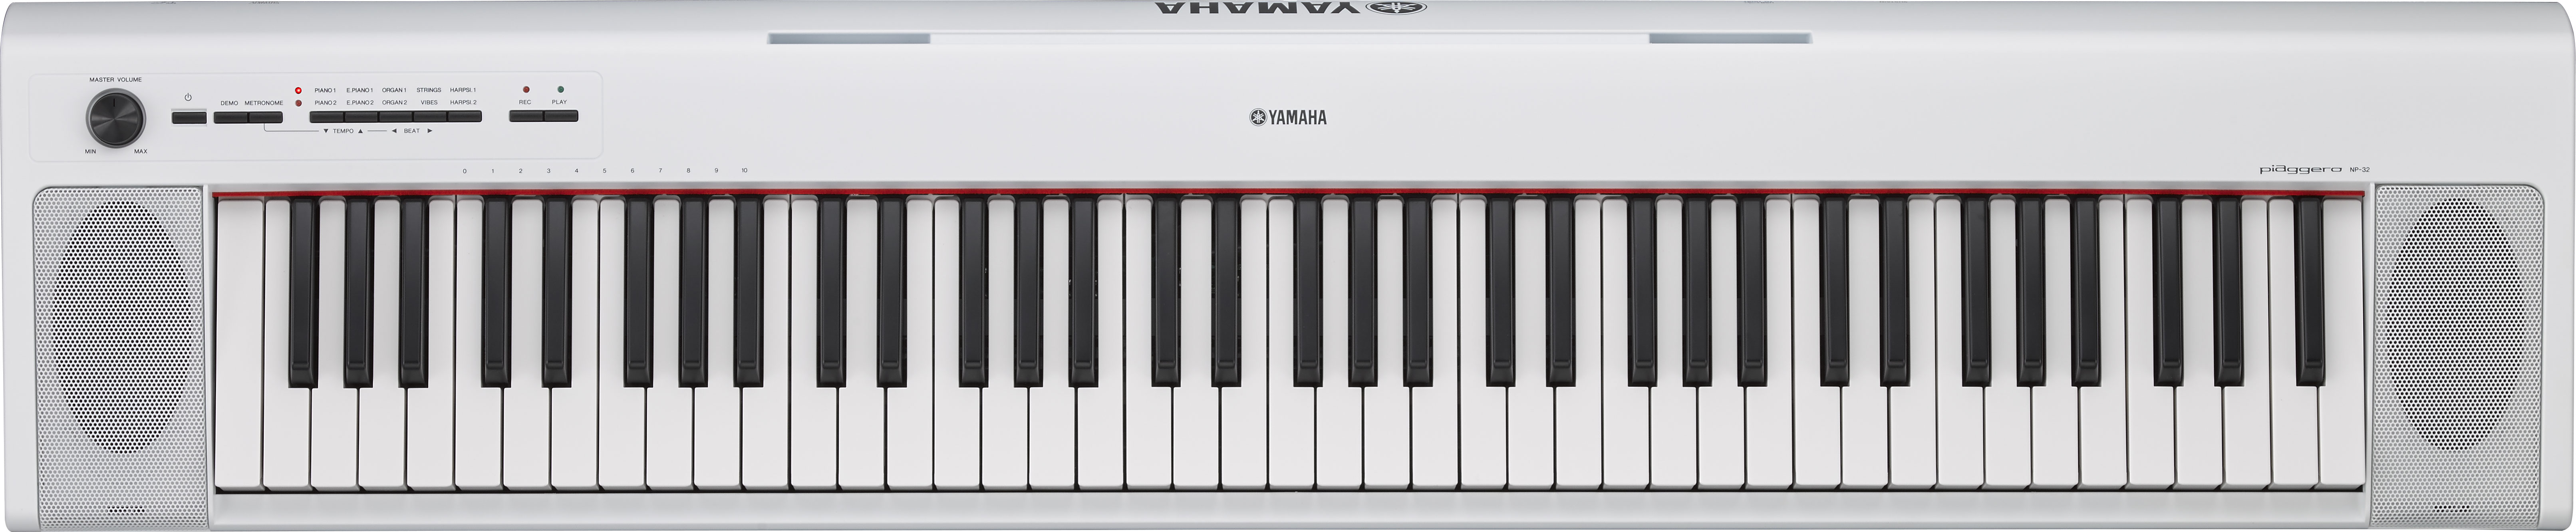 Yamaha NP-32 - white Portable digital piano